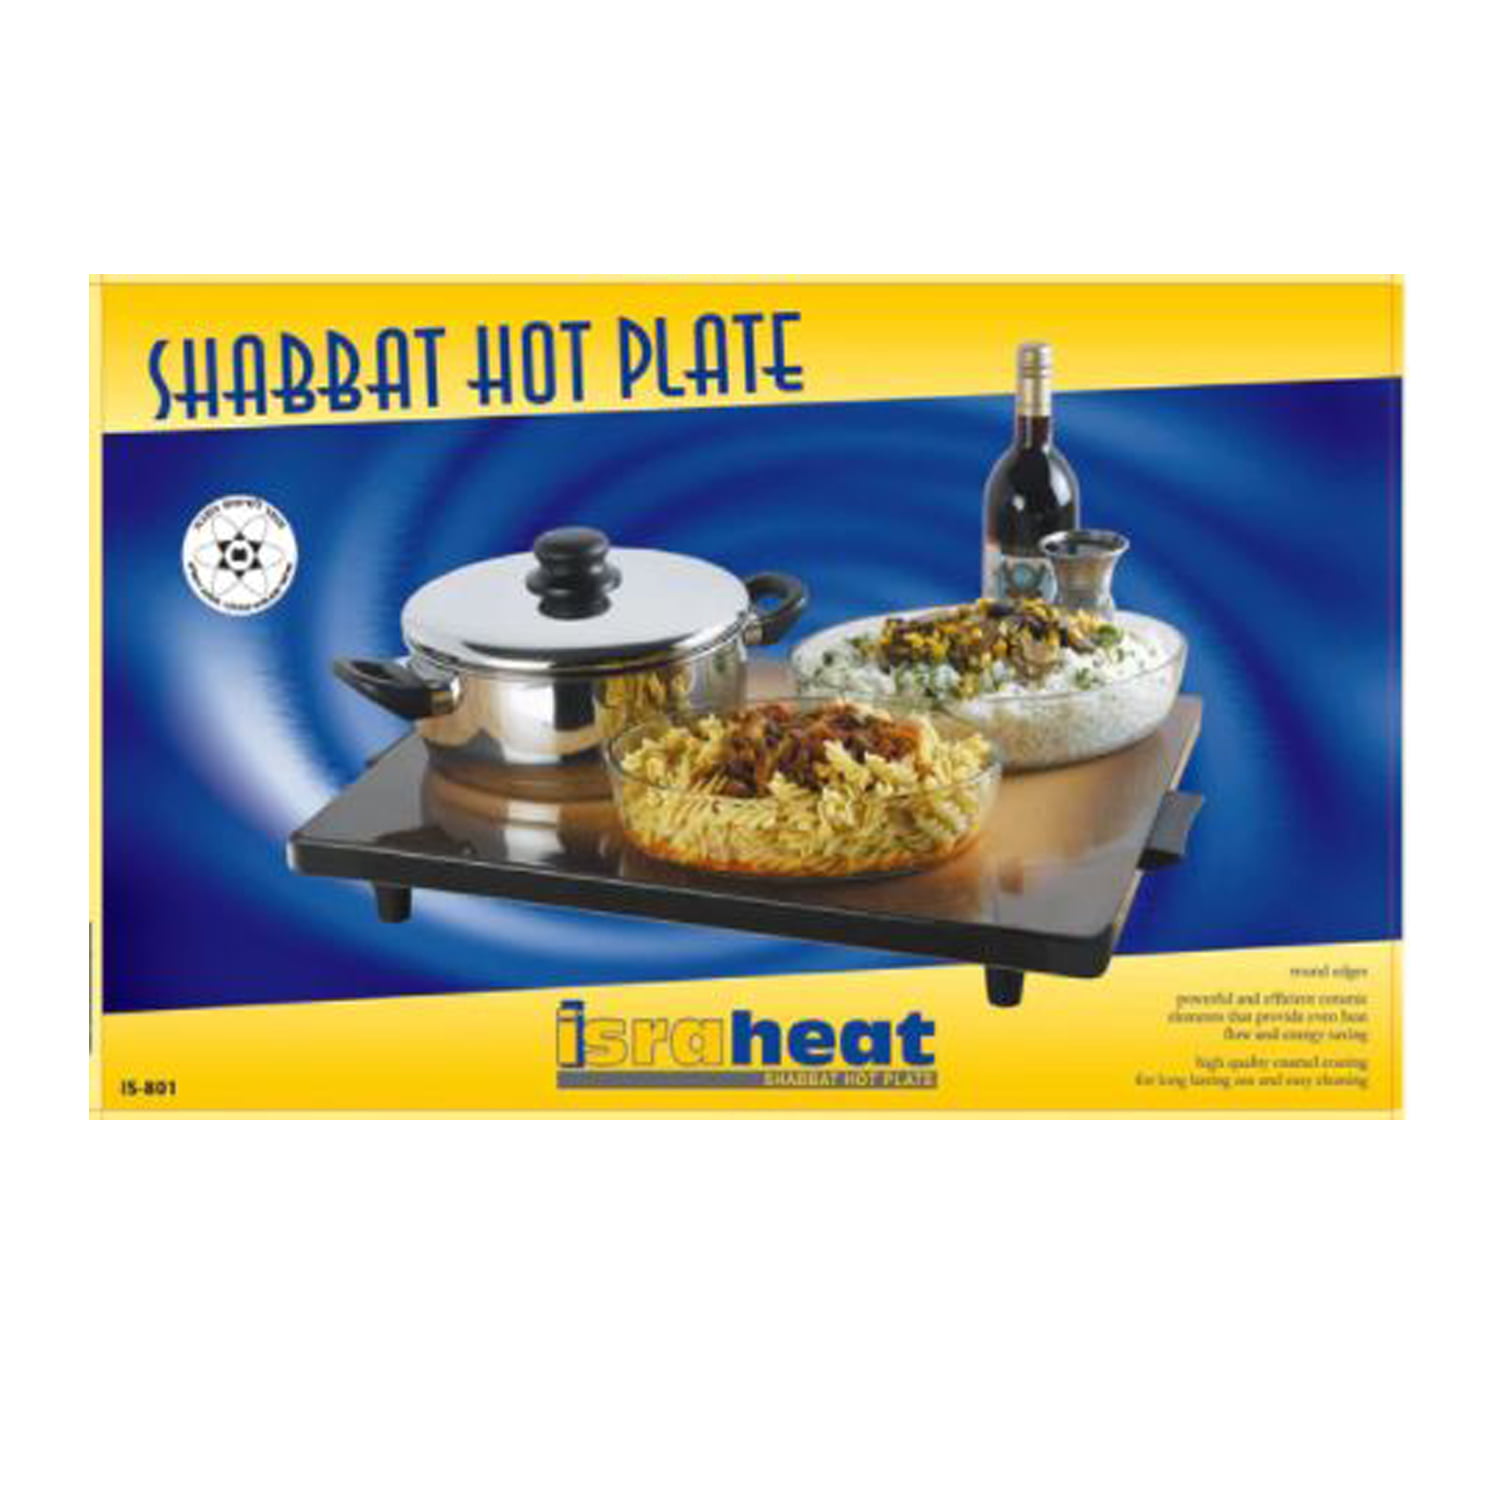 Permissible ways to heat up food on Shabbat - Halachipedia